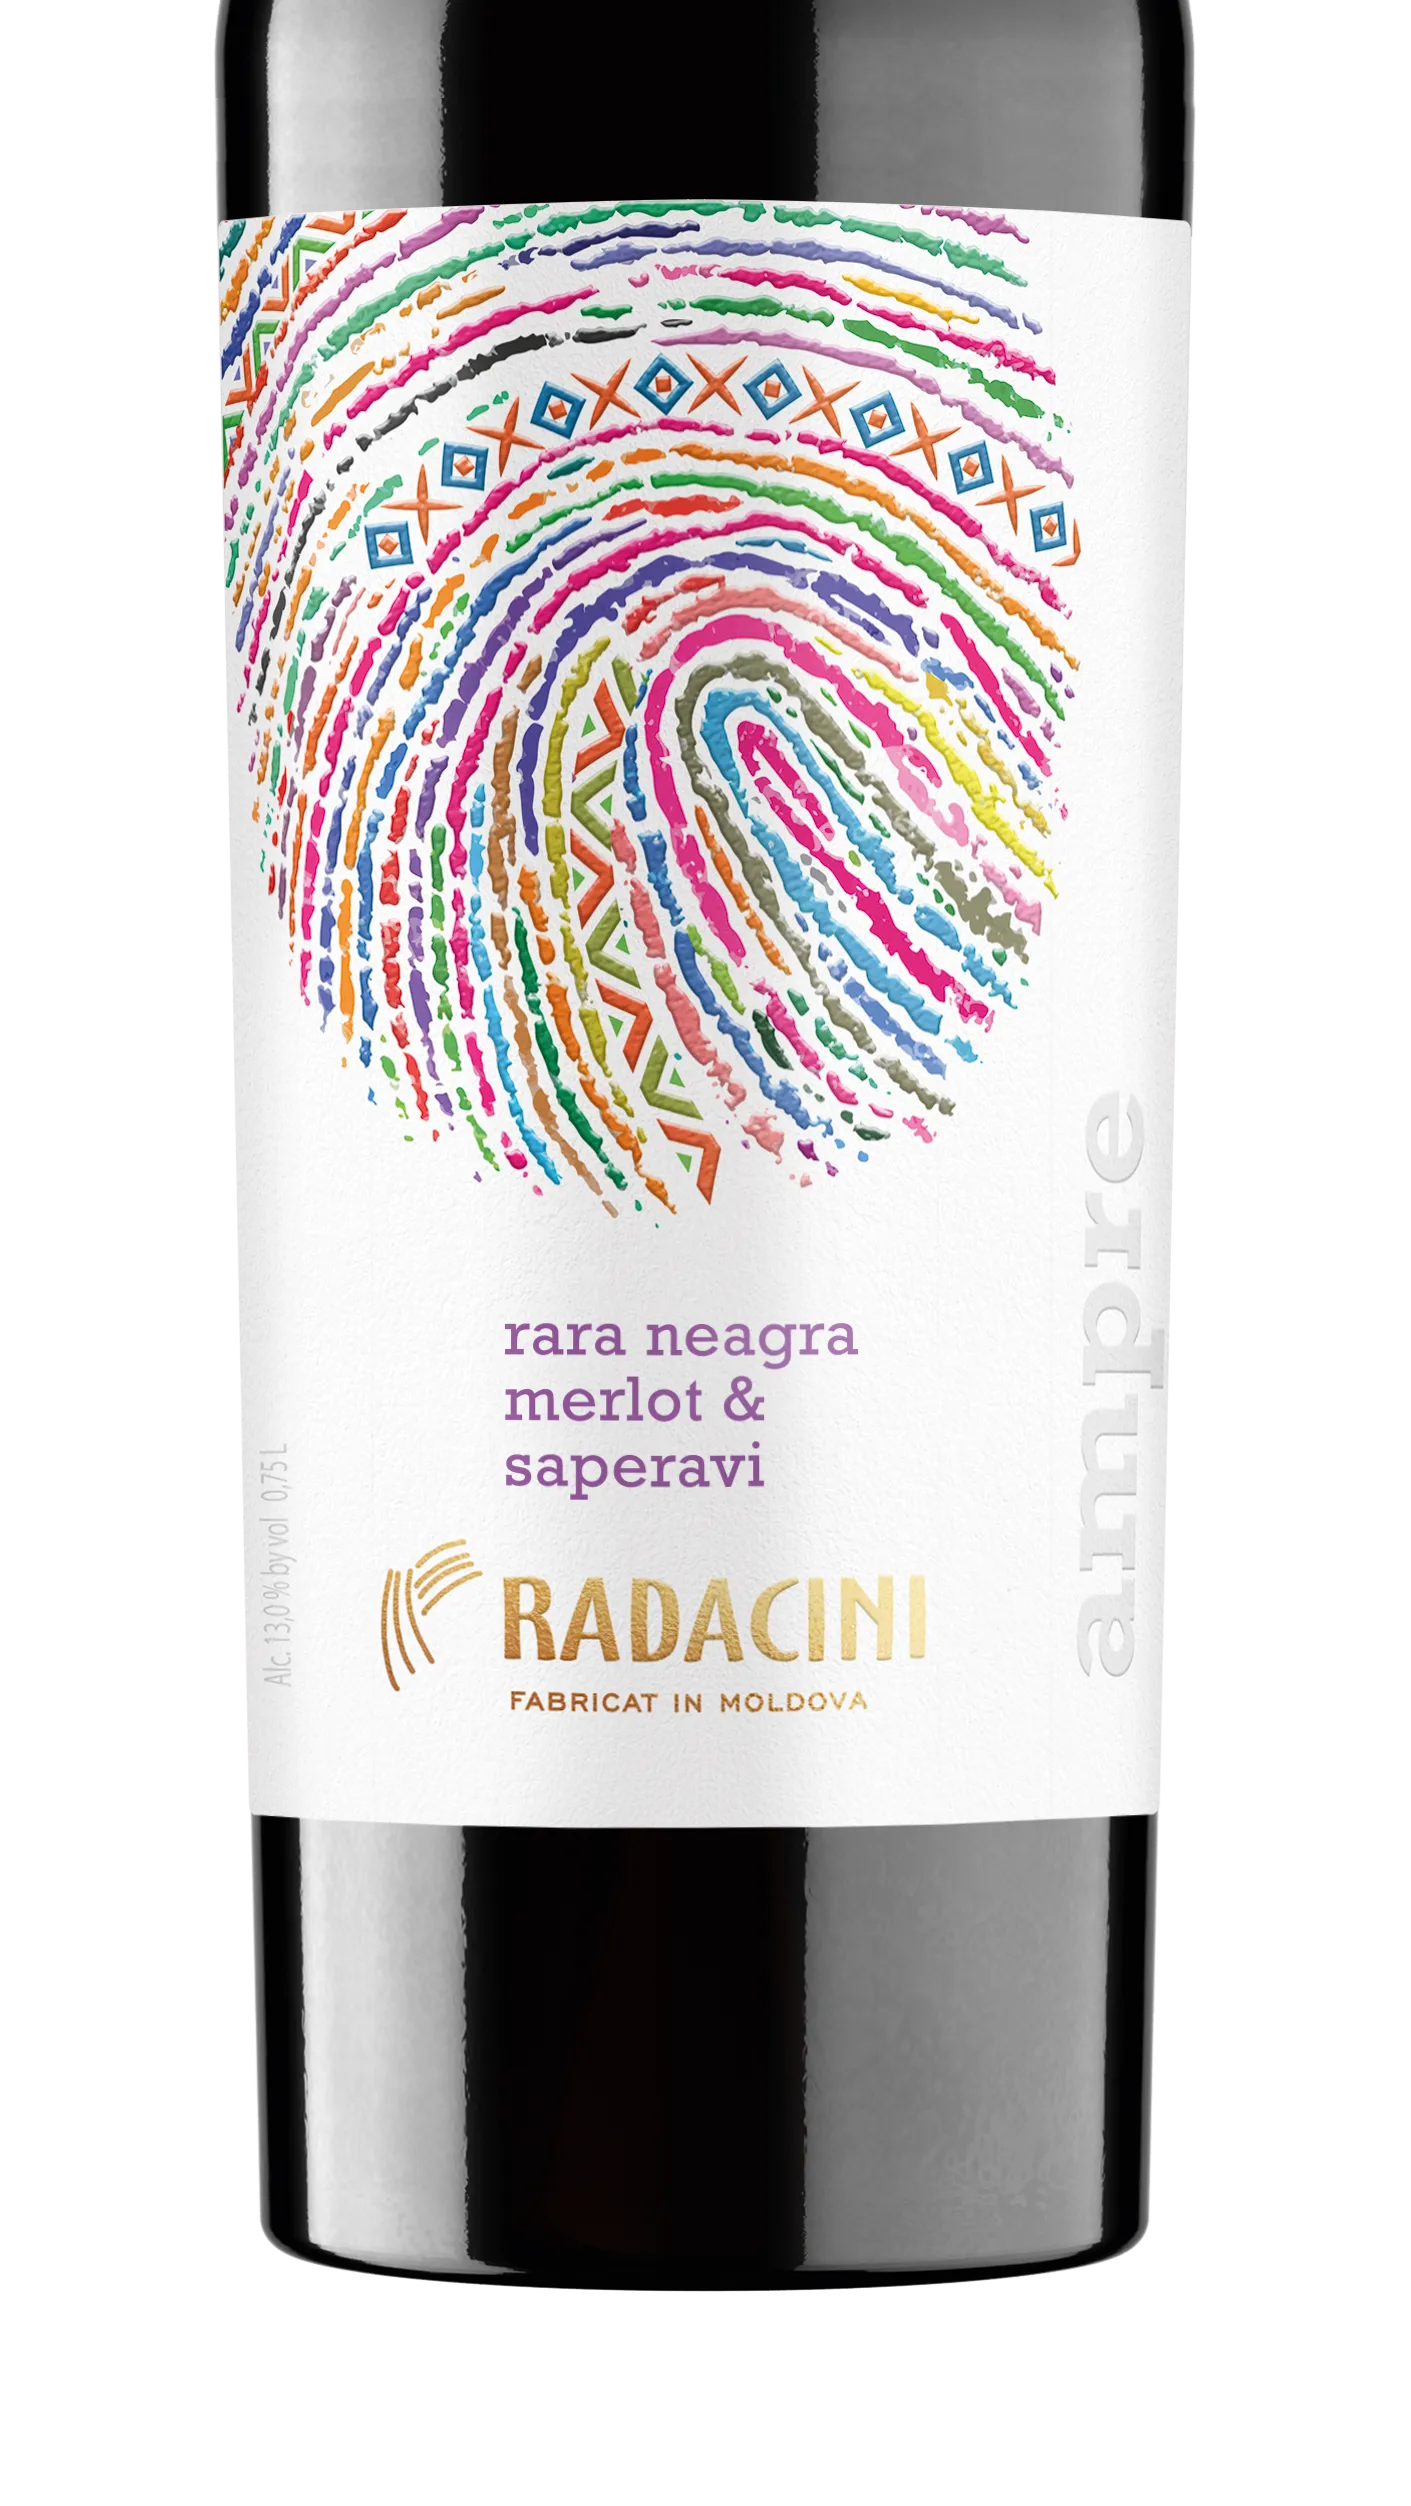 Bottle of Radacini Ampre Rara Negra - Merlot - Saperavi from search results